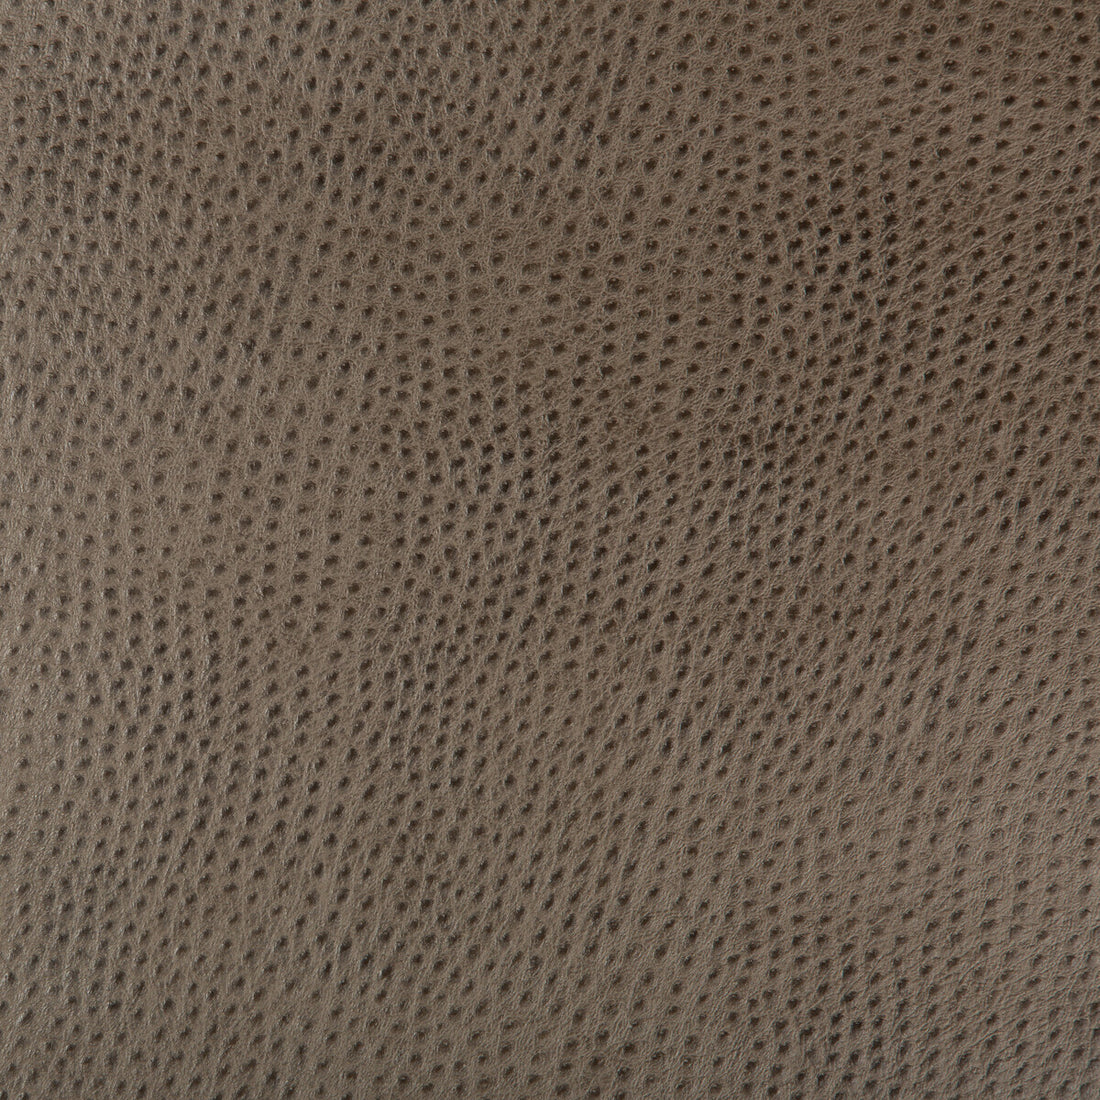 Kravet Design fabric in hubble-106 color - pattern HUBBLE.106.0 - by Kravet Design